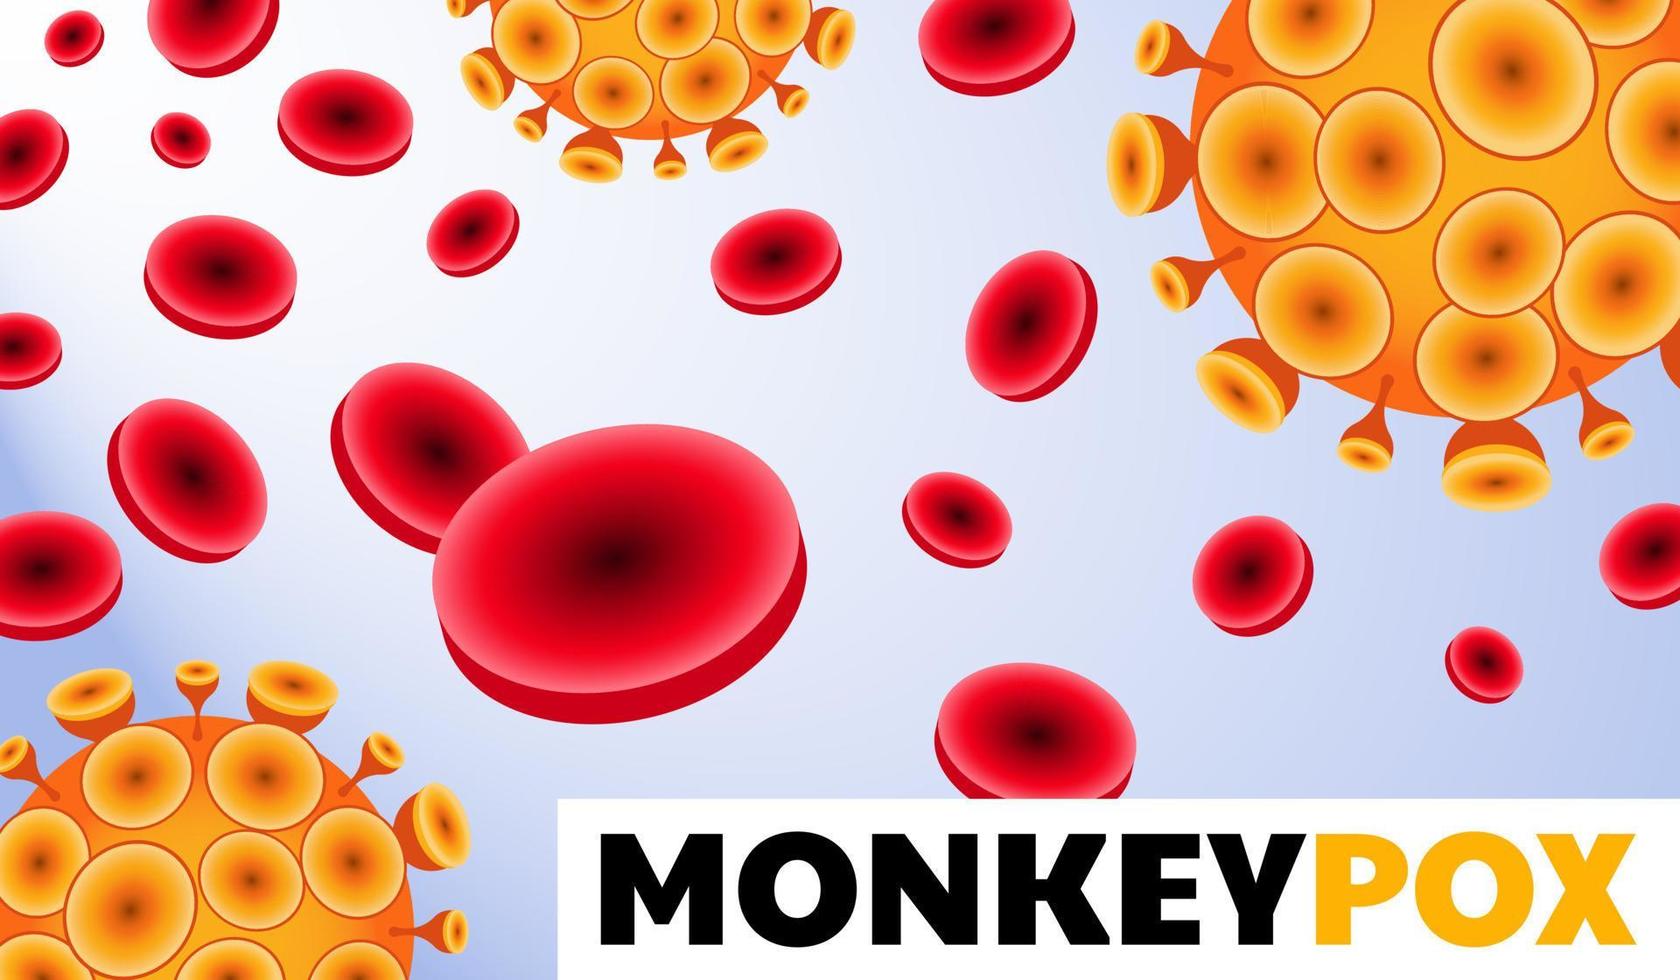 Monkeypox virus banner. Monkey Pox molecules poster on blood cells background. Vector illustration.